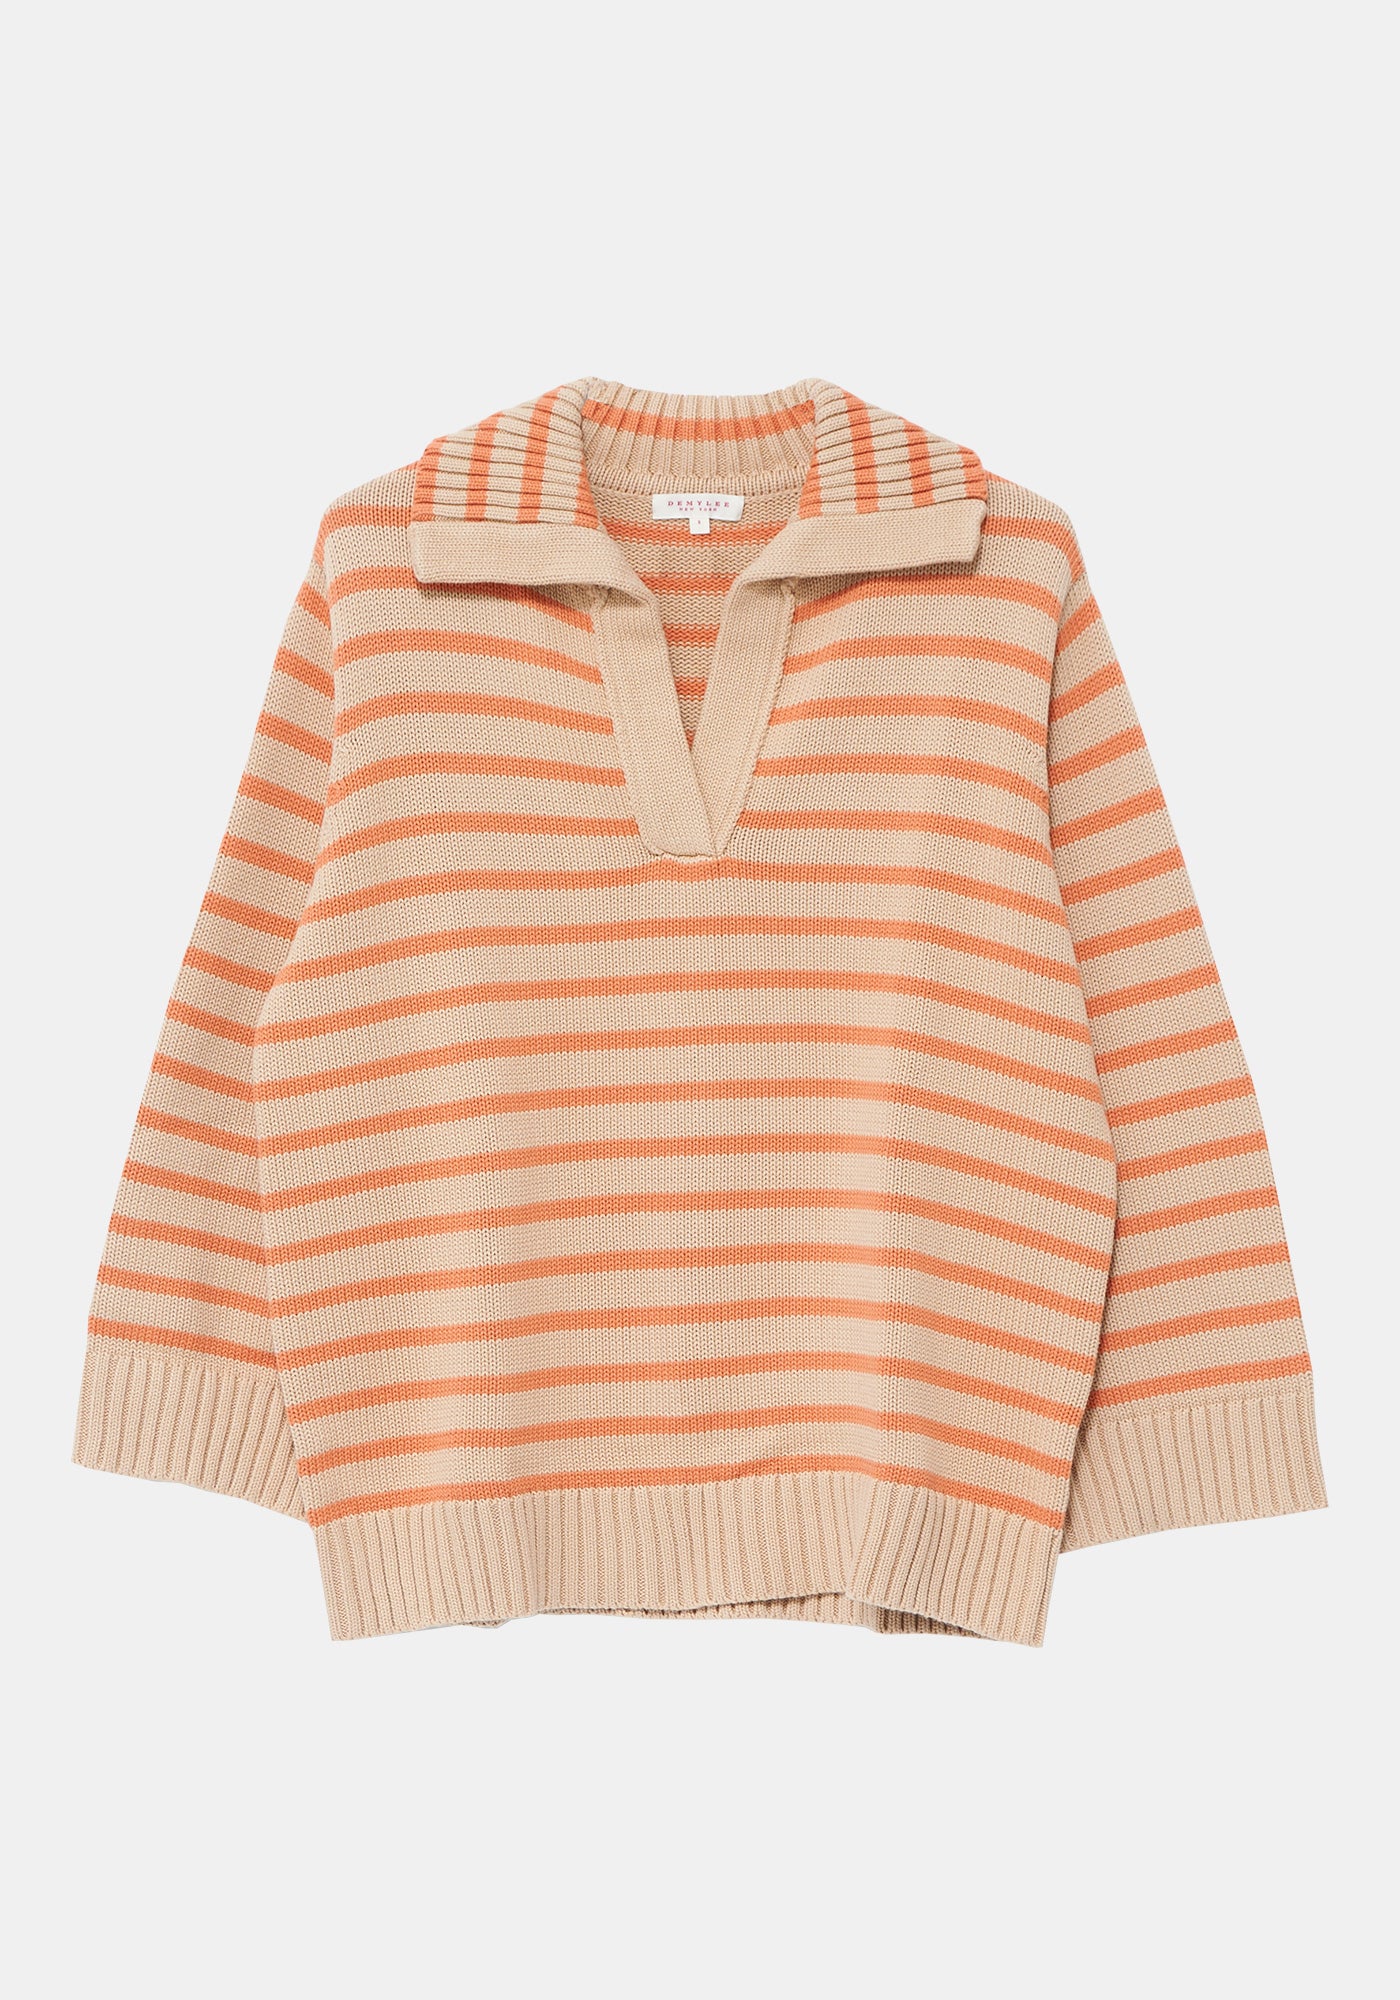 Leigh Stripe Sweater - Bone / Orange